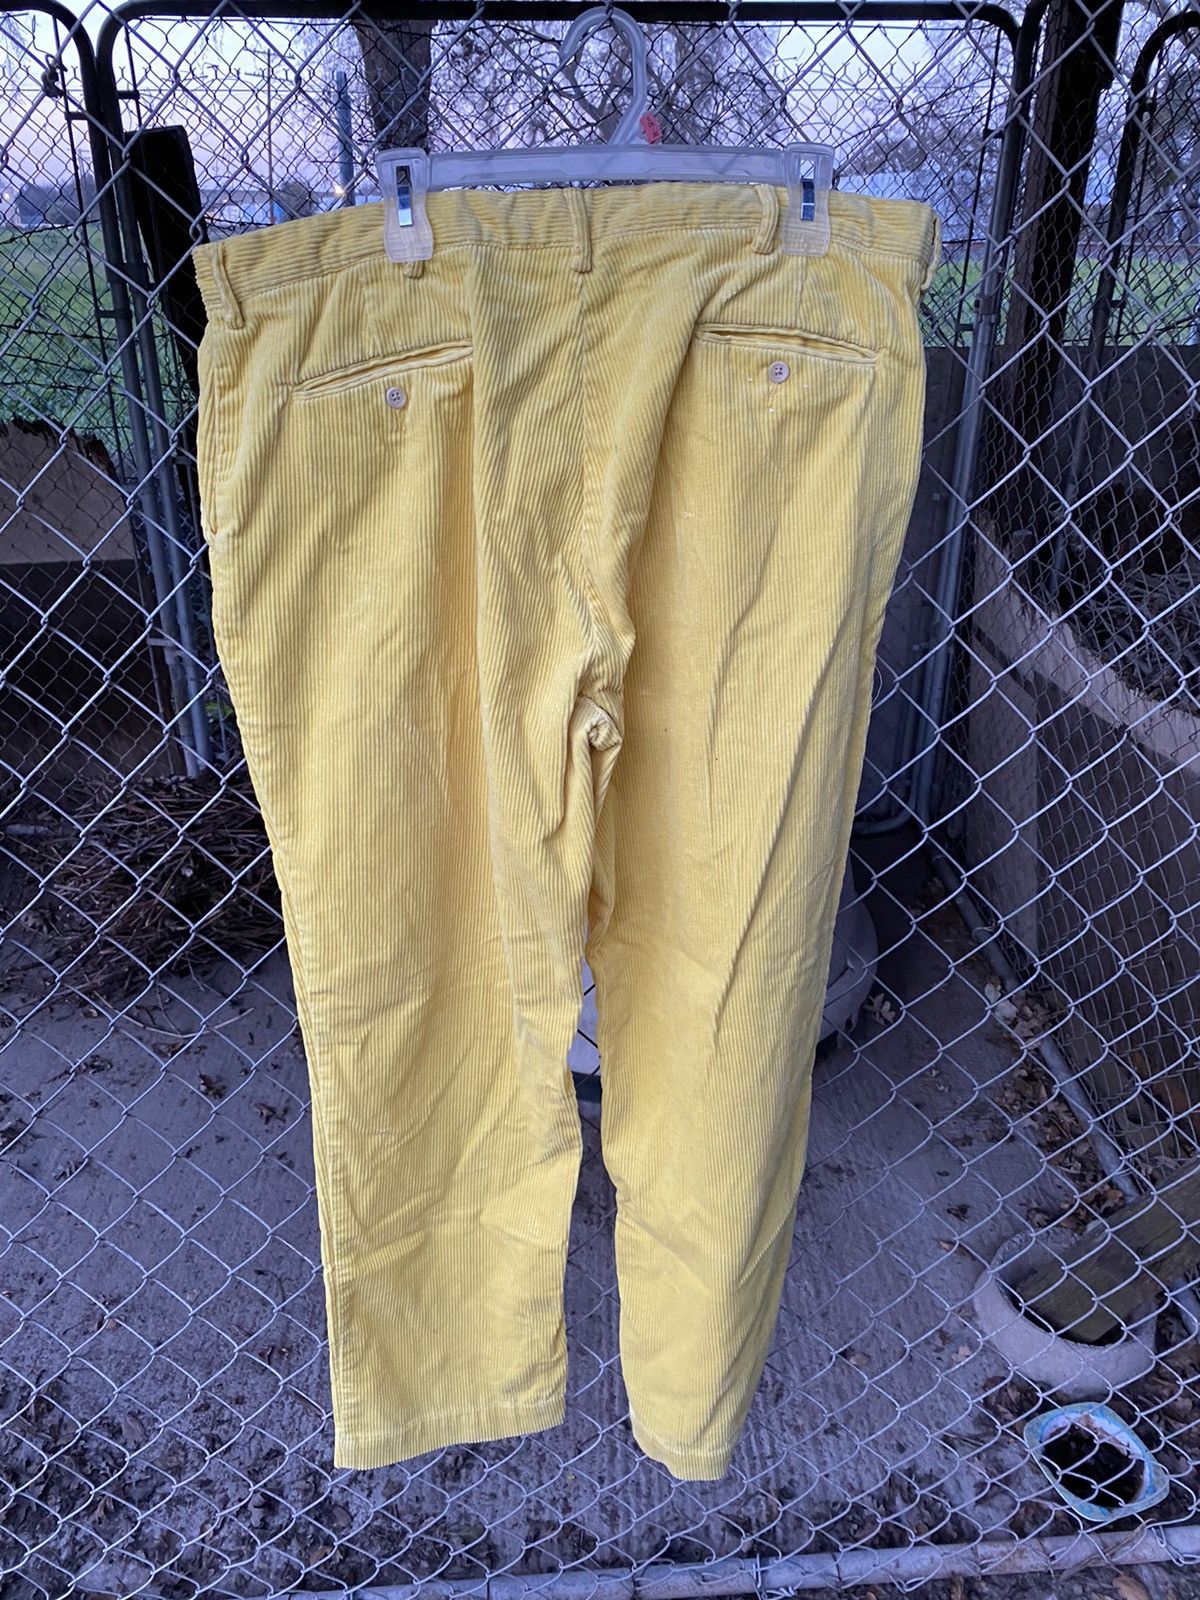 Polo Ralph Lauren Polo Ralph Lauren Yellow Corduroy Pants Size US 40 / EU 56 - 2 Preview